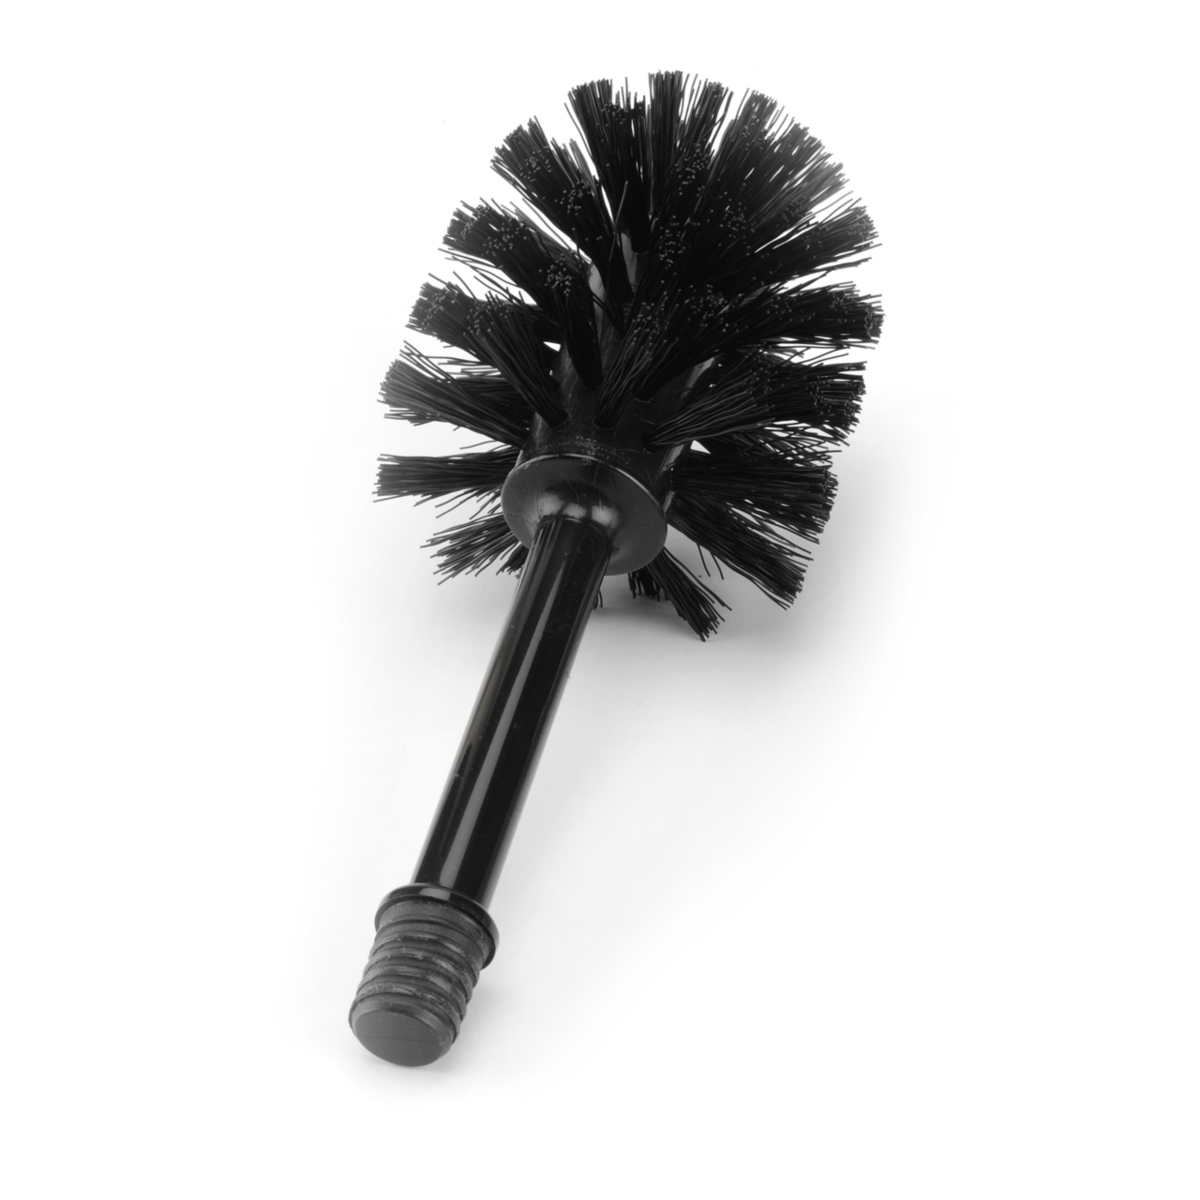 WBU 3 Brush head black with thread